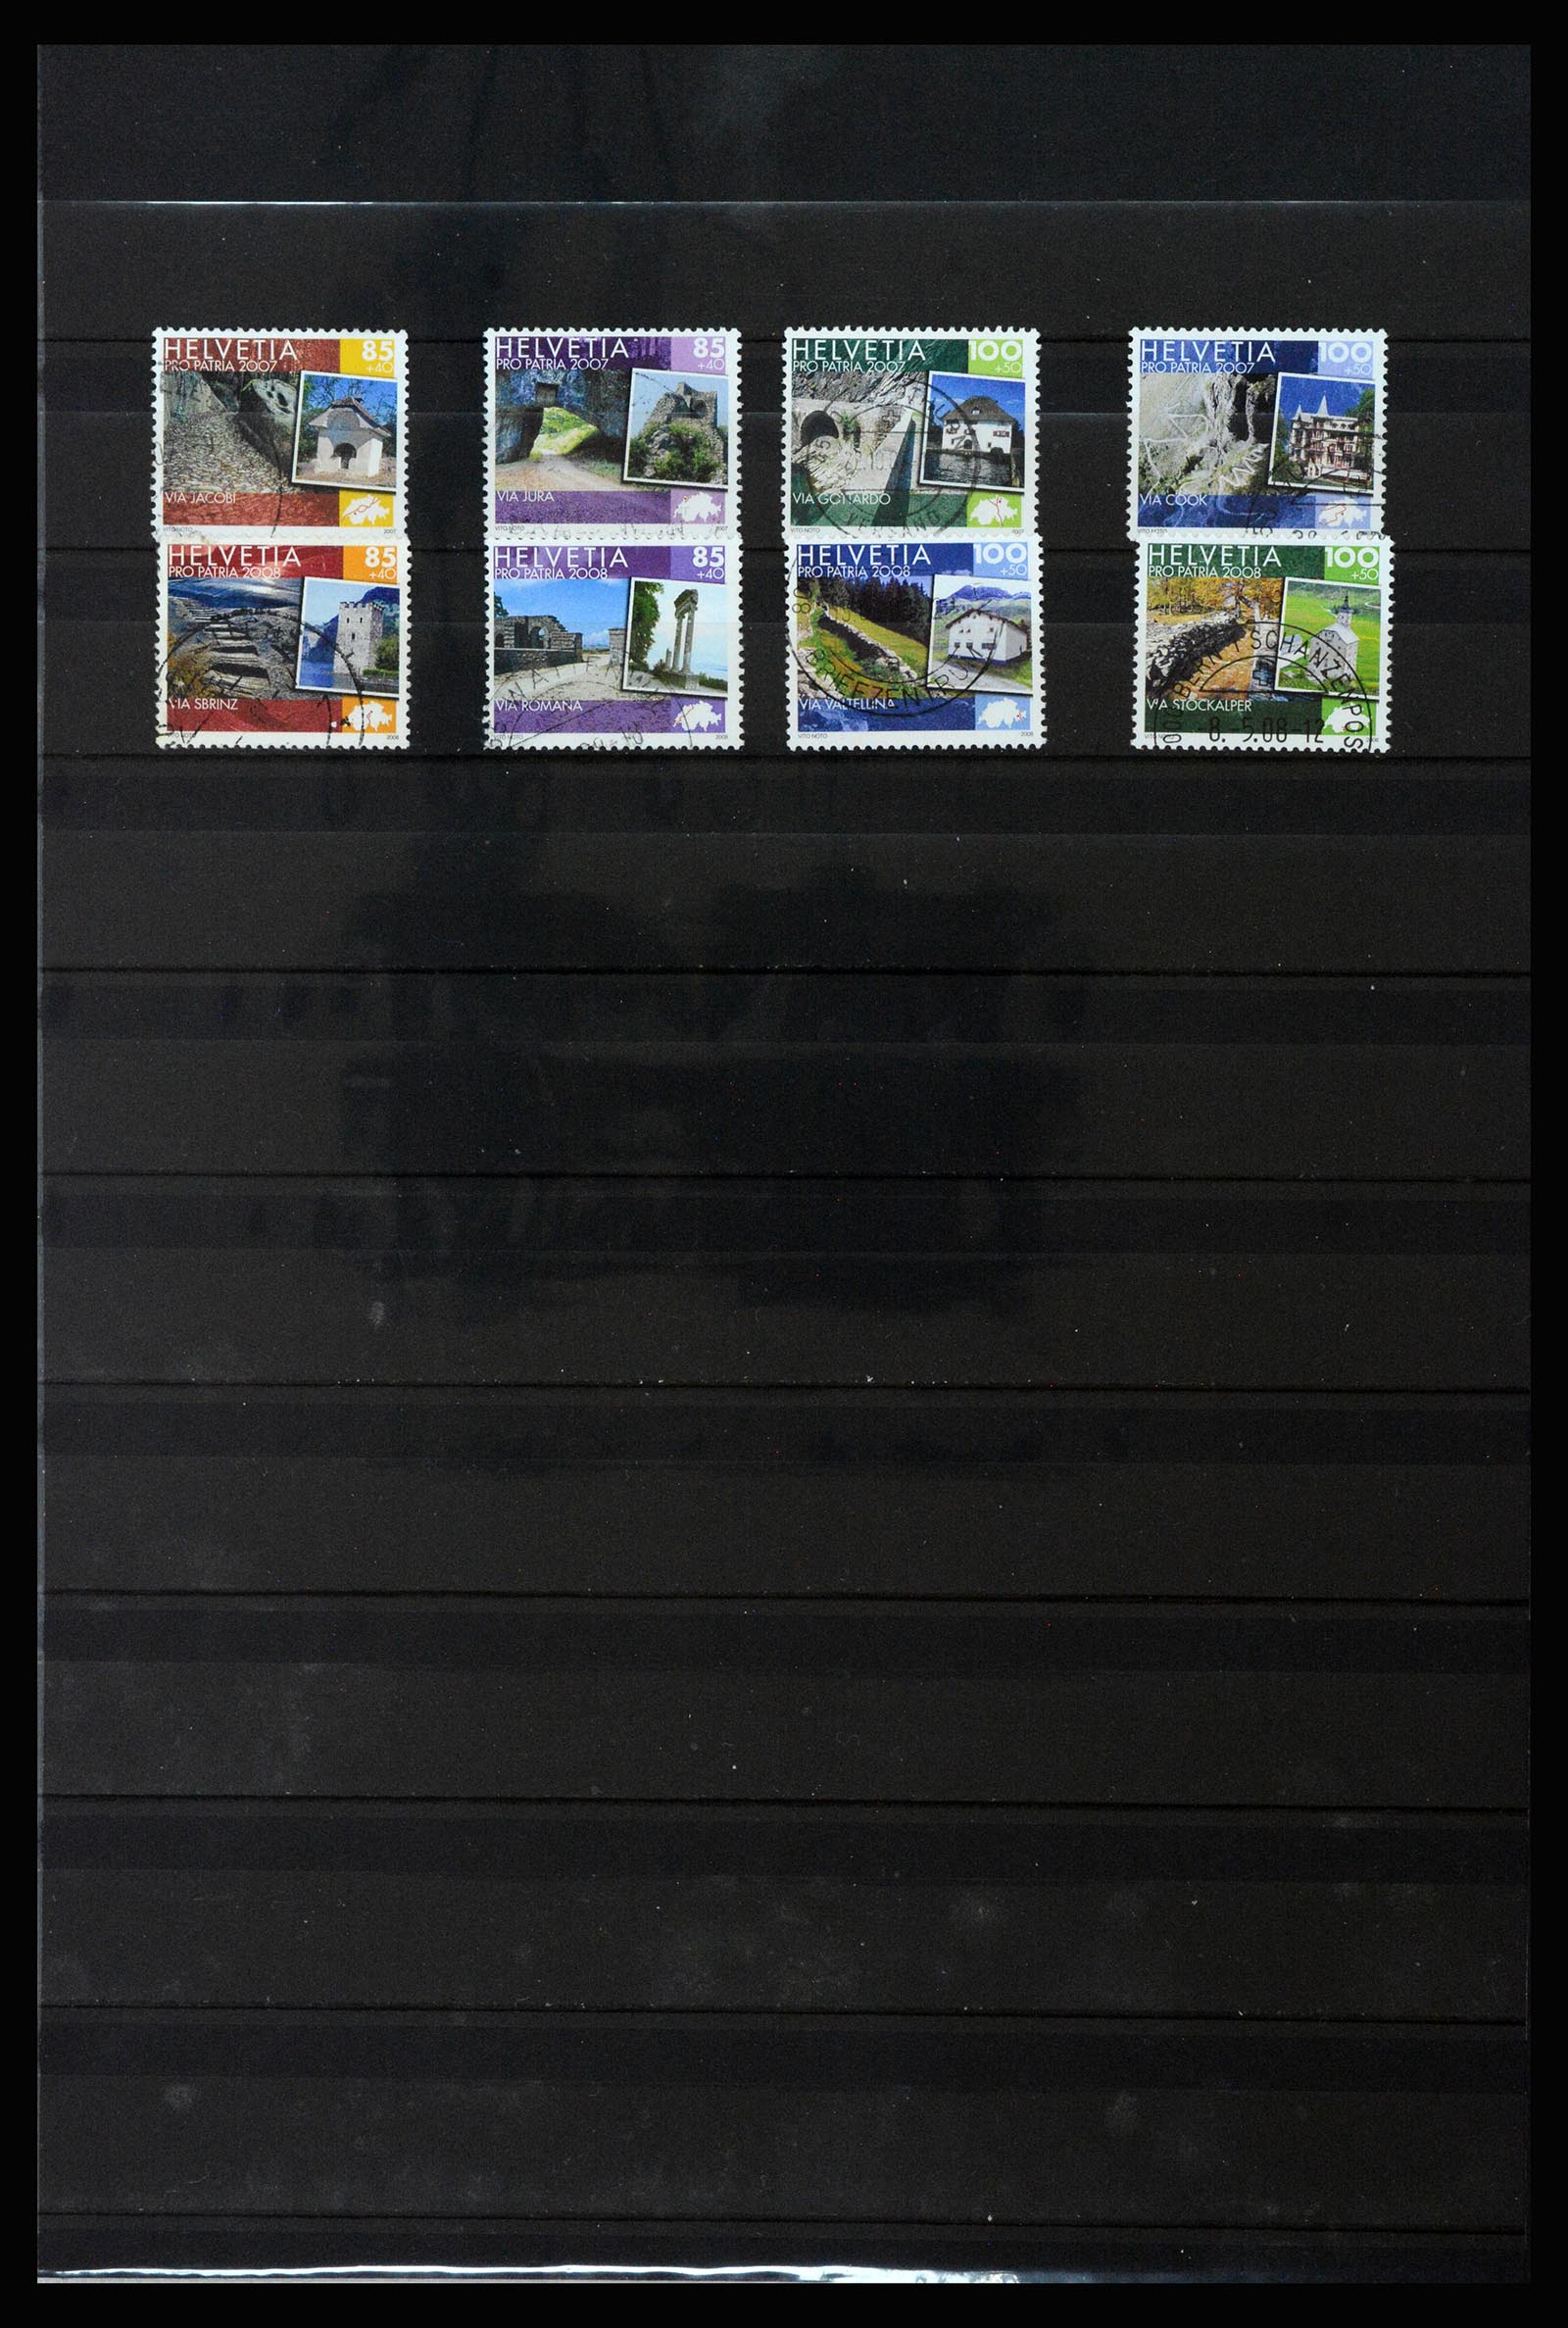 37225 093 - Stamp collection 37225 Switzerland 1854-2020.